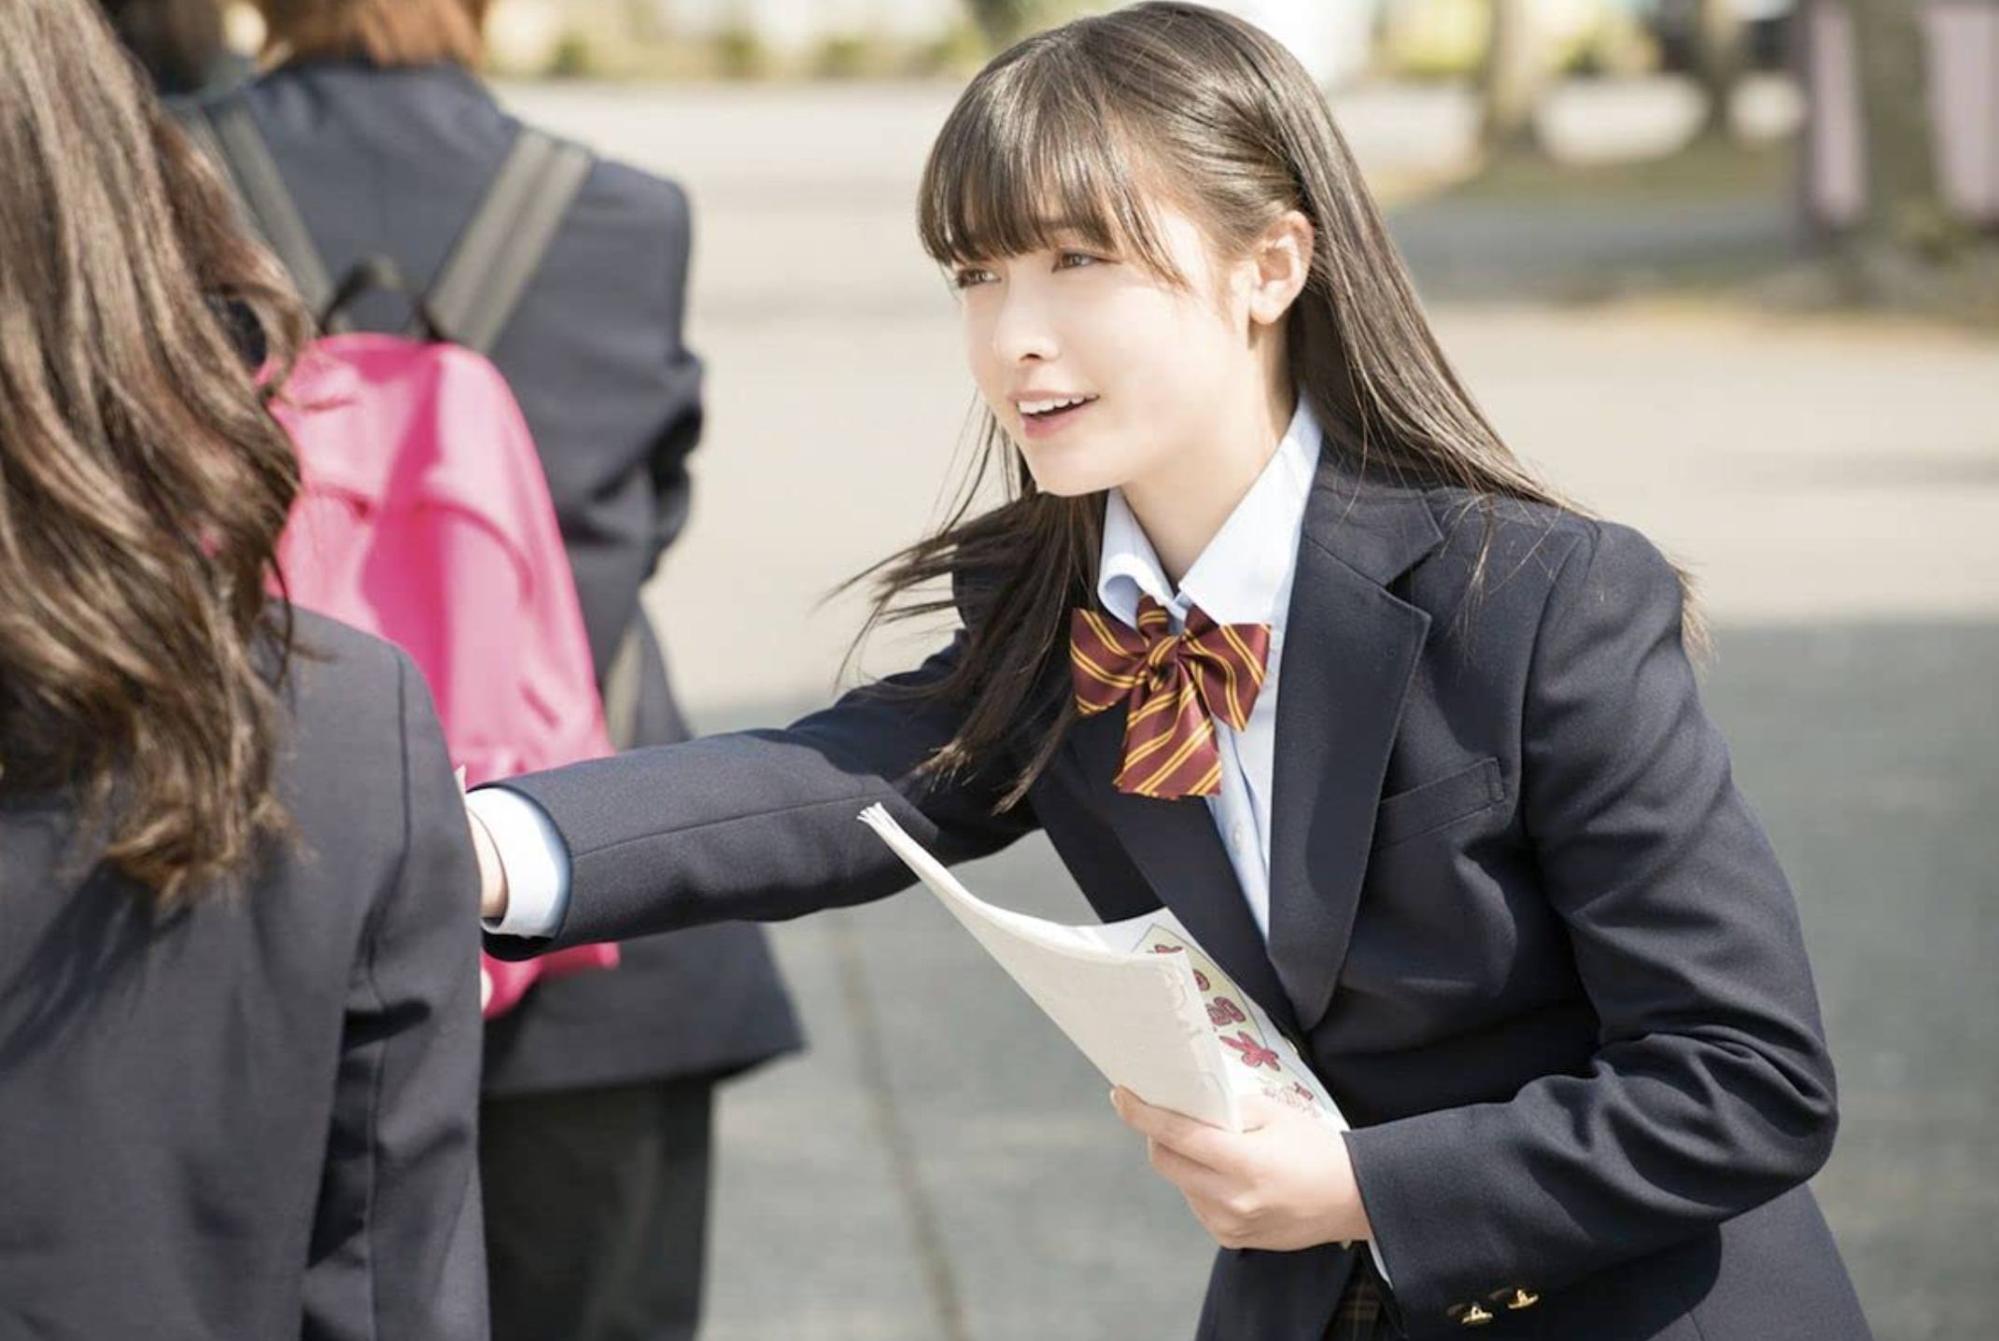 Japanese high school romance movies - Haruta & Chika